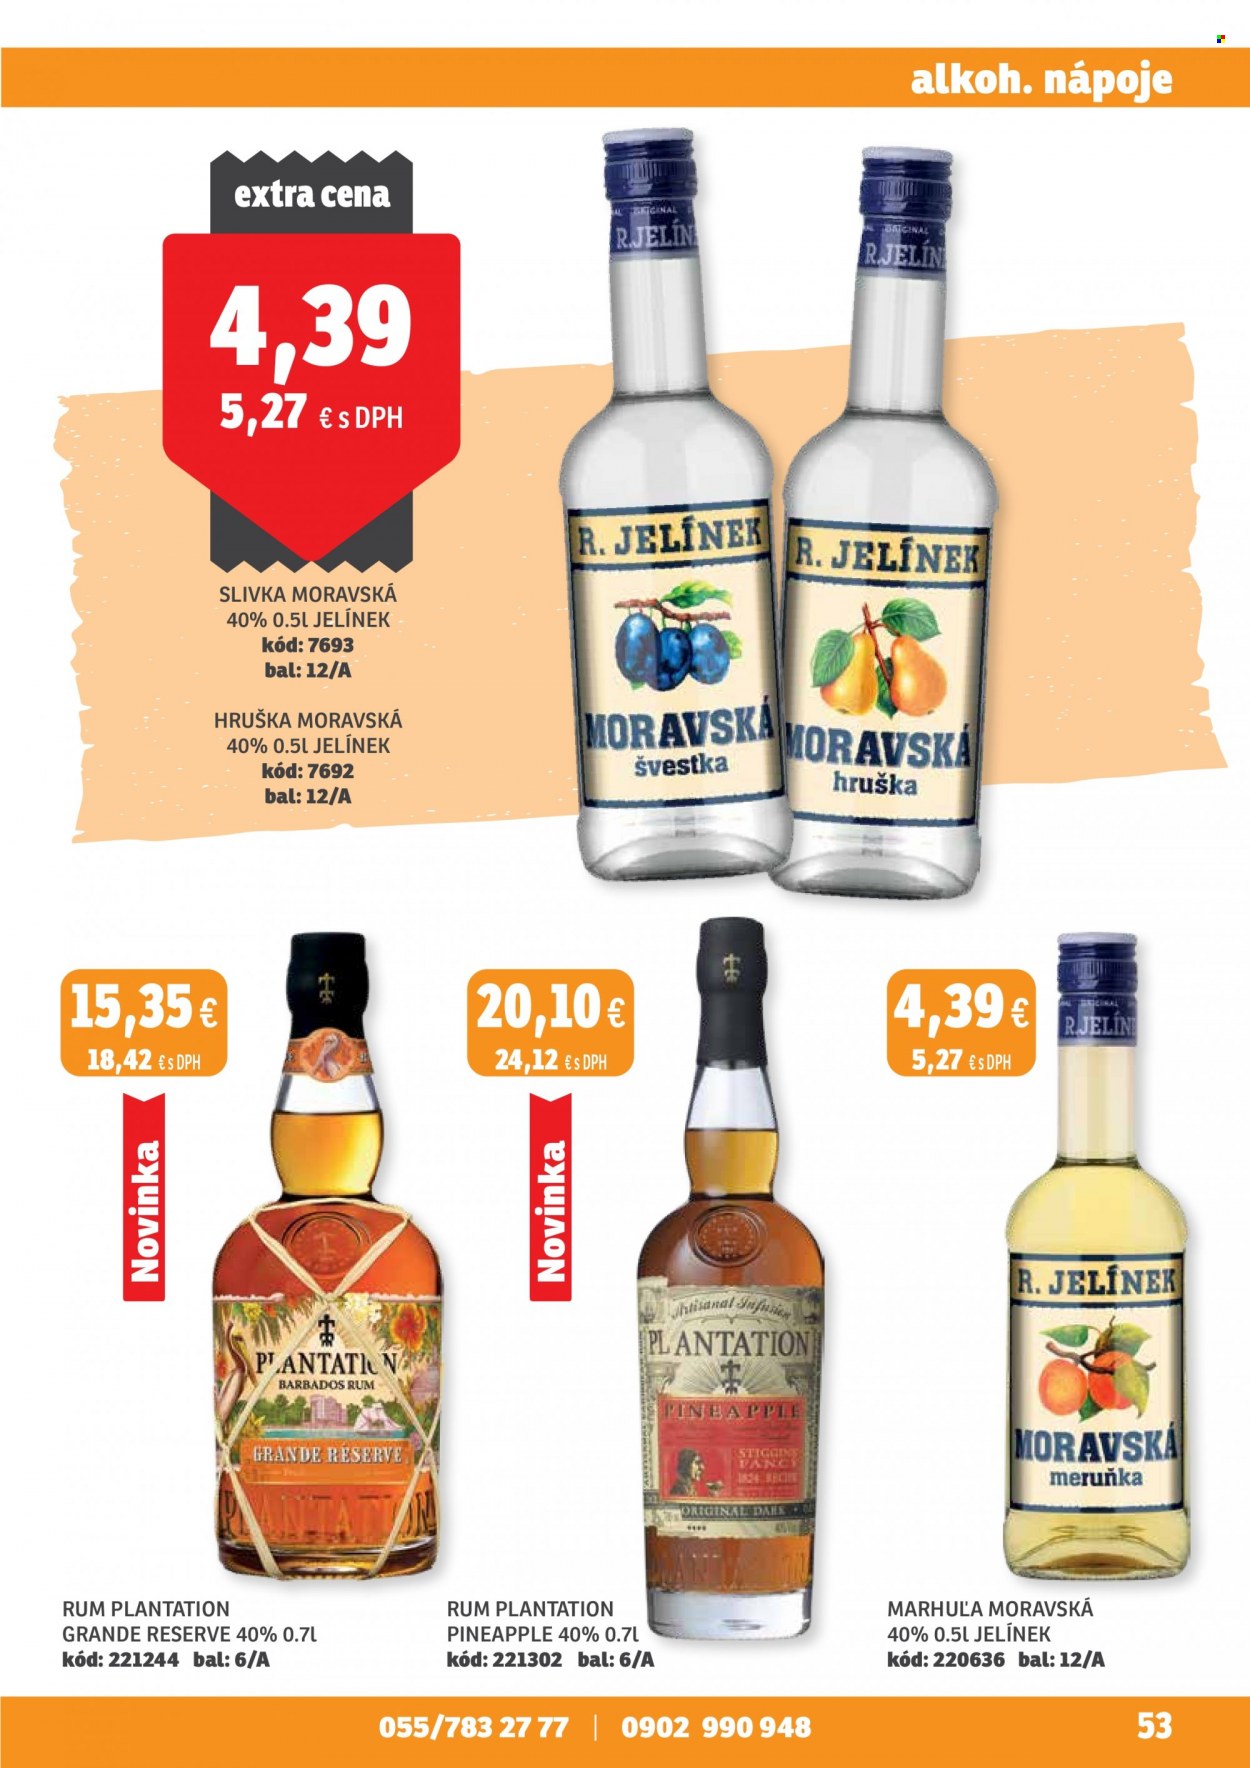 thumbnail - Leták Labaš - 1.12.2022 - 15.12.2022 - Produkty v akcii - alkohol, rum, slivovica, R. Jelínek, Moravská Švestka, Plantation Rum. Strana 53.